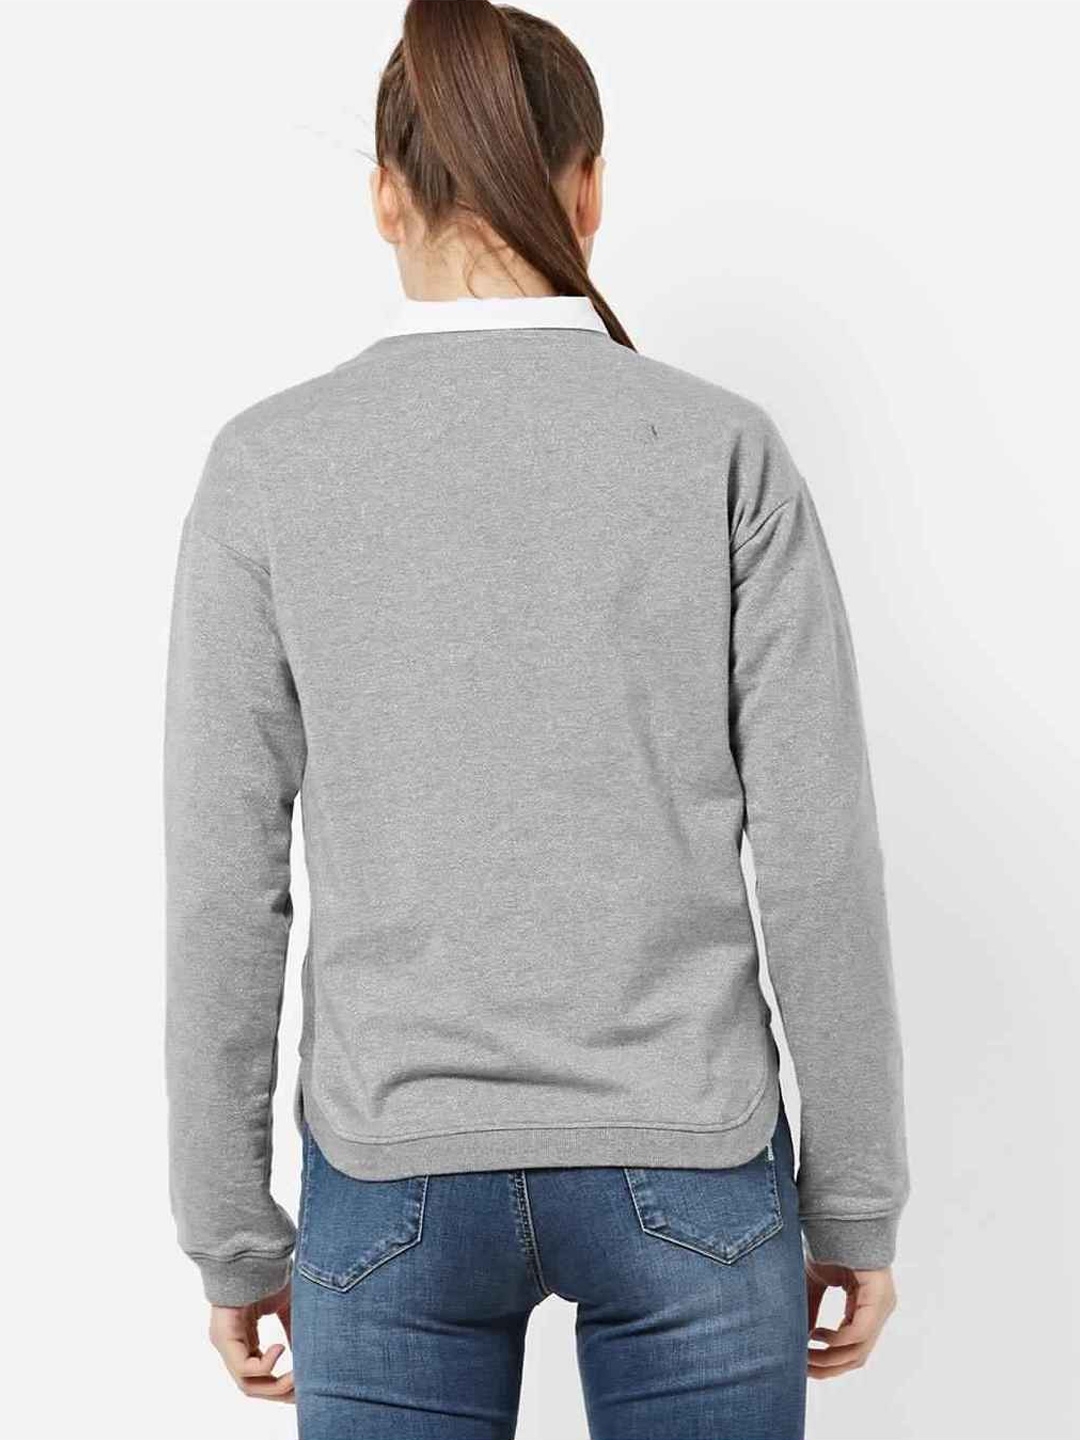 Shimmery Sweatshirt with Drop-Shoulder Sleeves